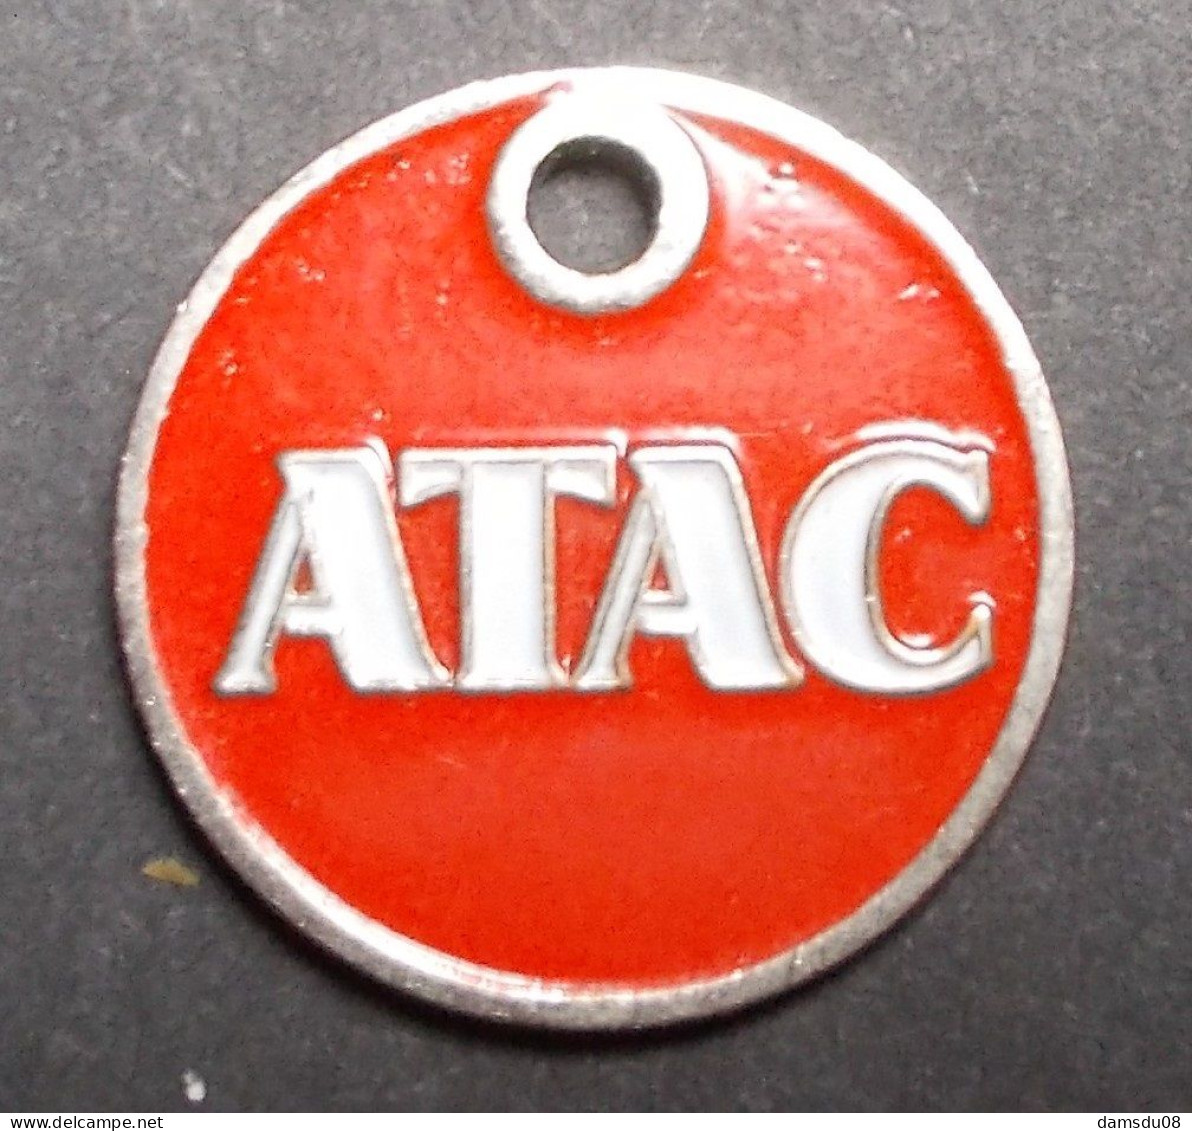 Jeton De Caddie ATAC - Trolley Token/Shopping Trolley Chip